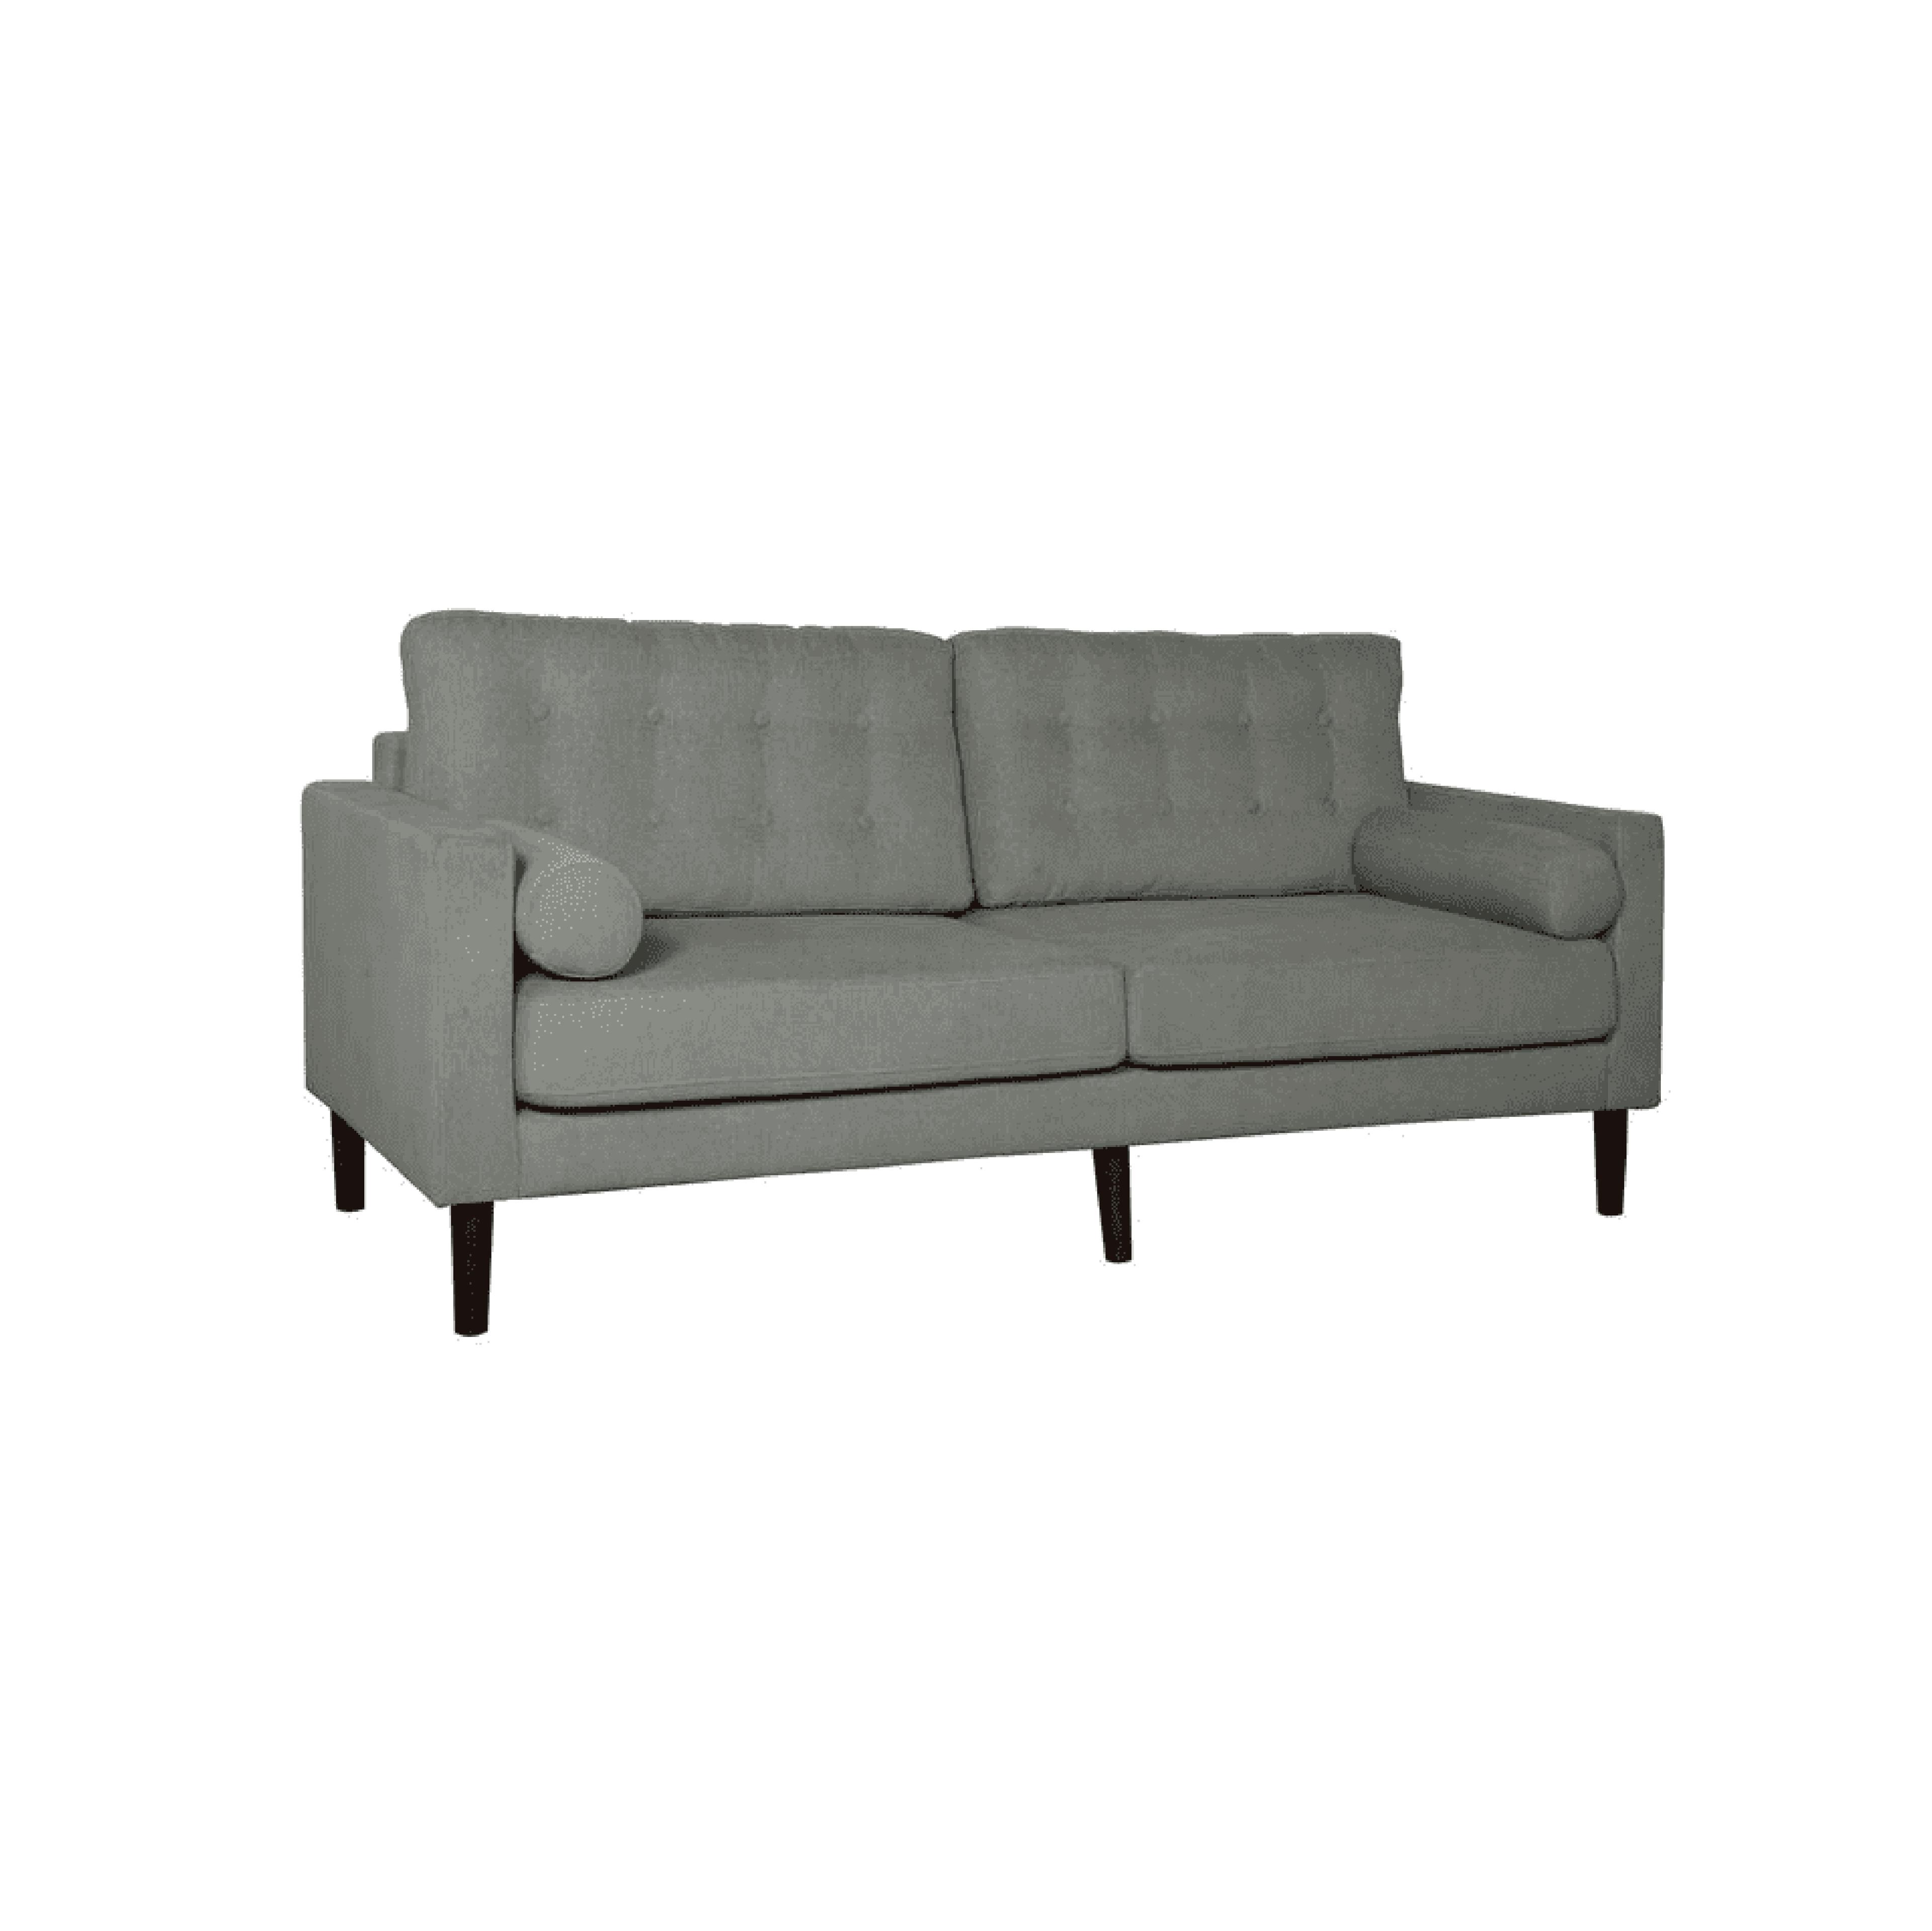 Forli Three Seater Sofa in Ash Grey Colour